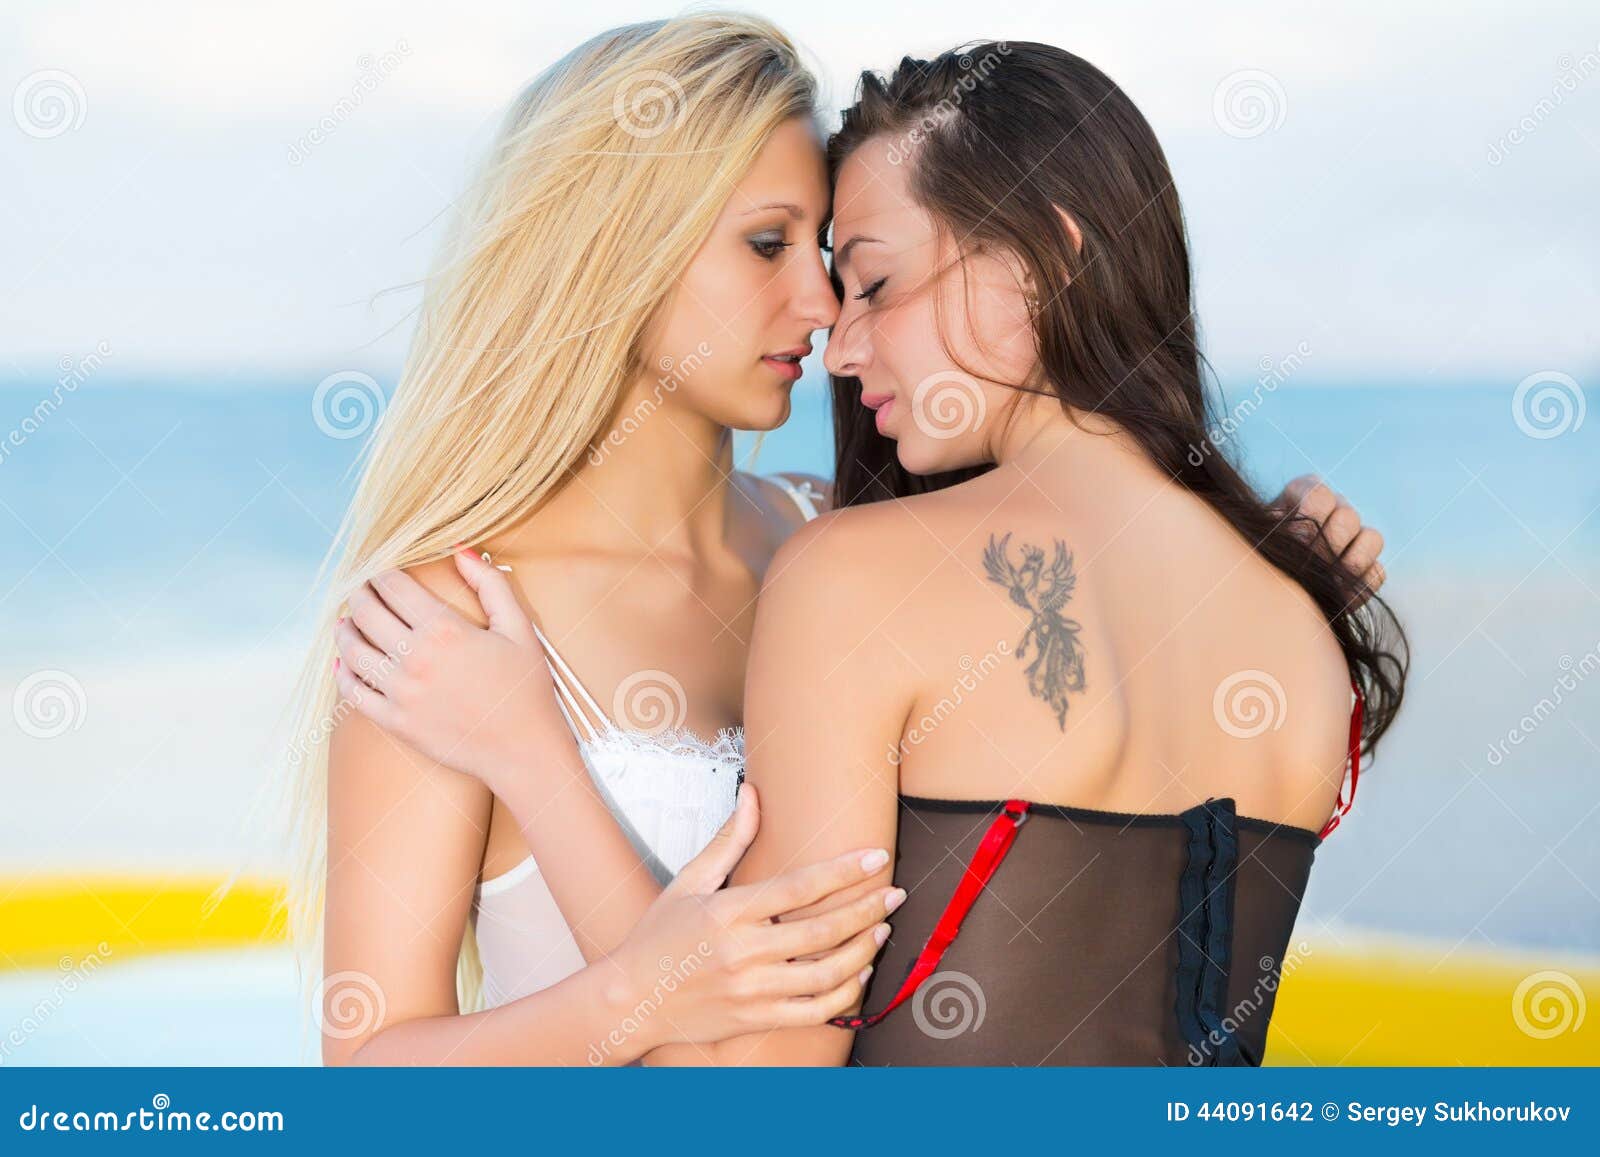 danni lock recommends 2 Hot Women Kissing